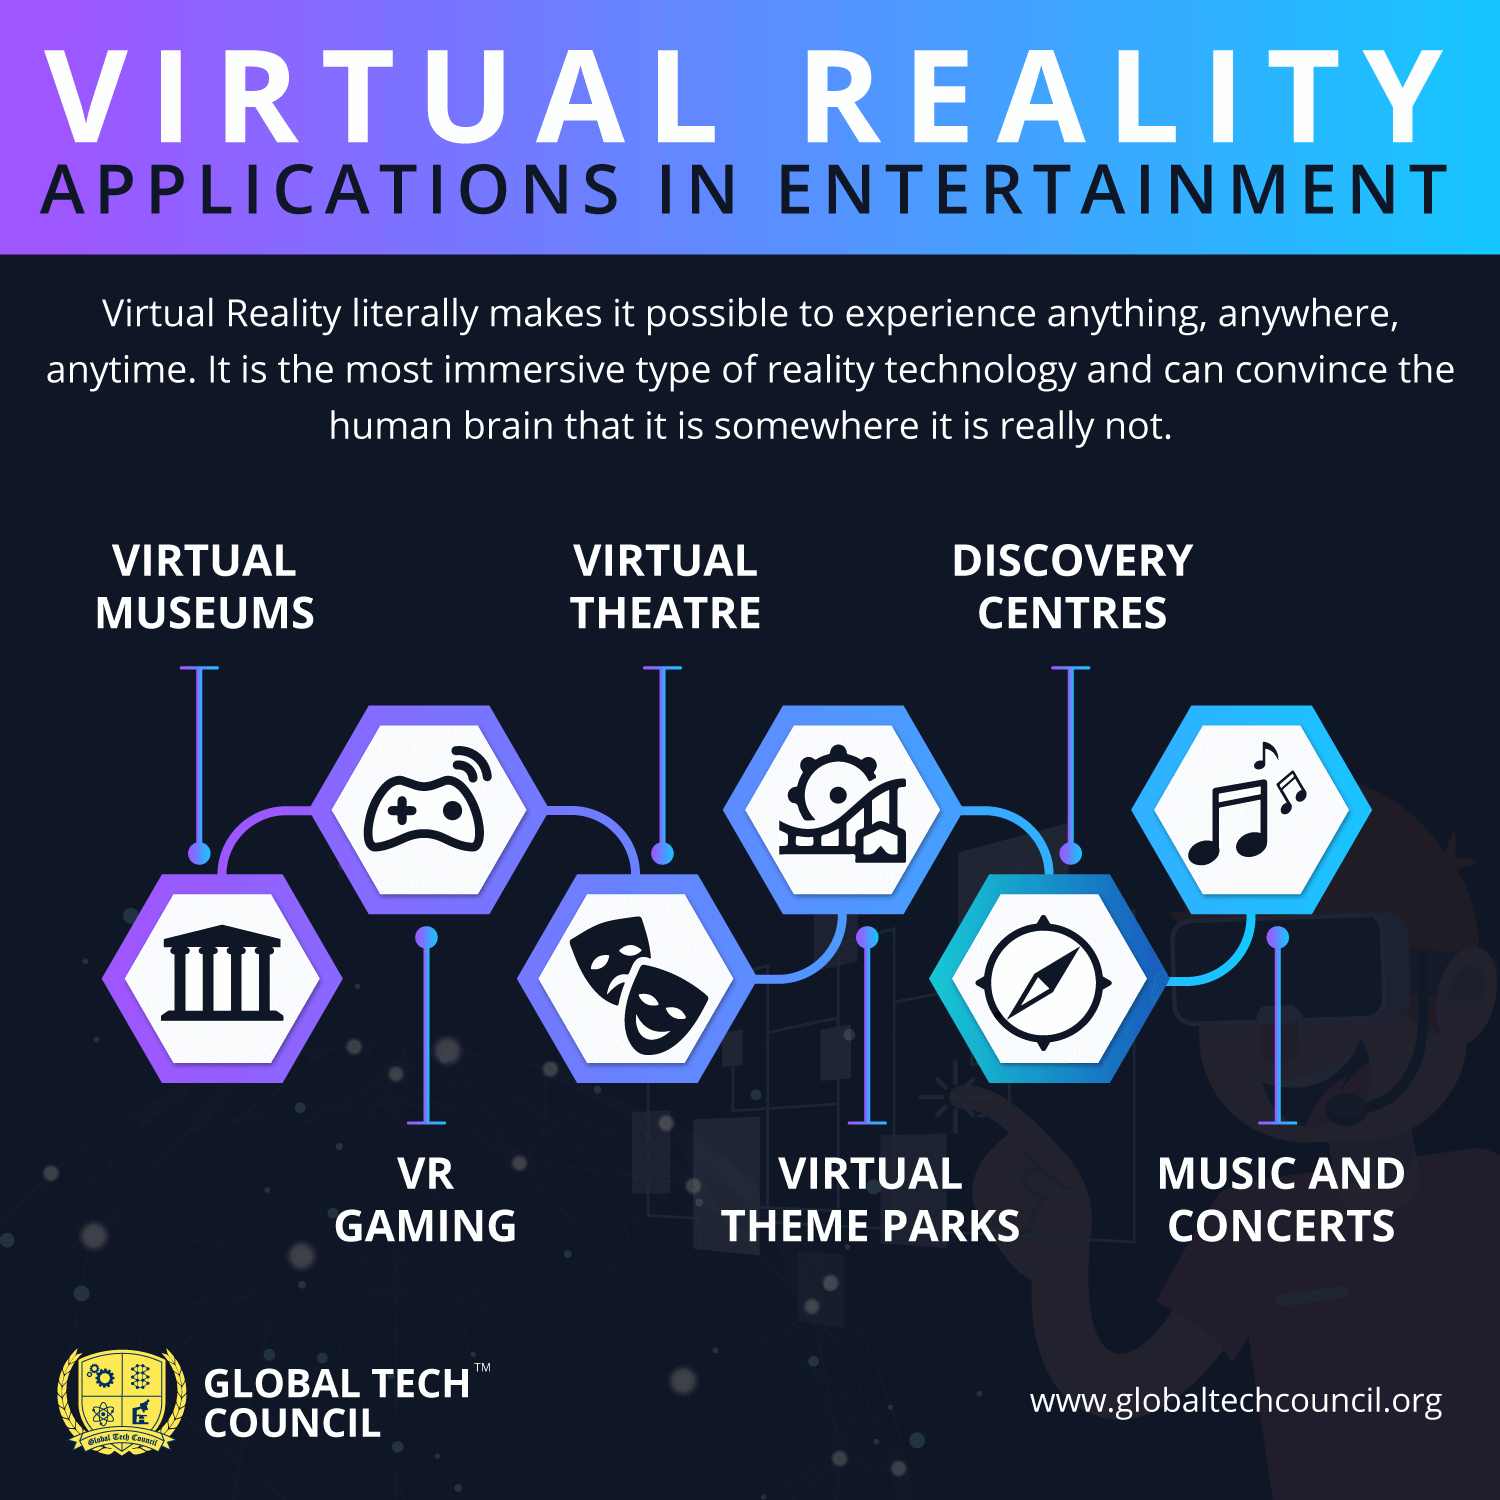 Virtual Reality applications